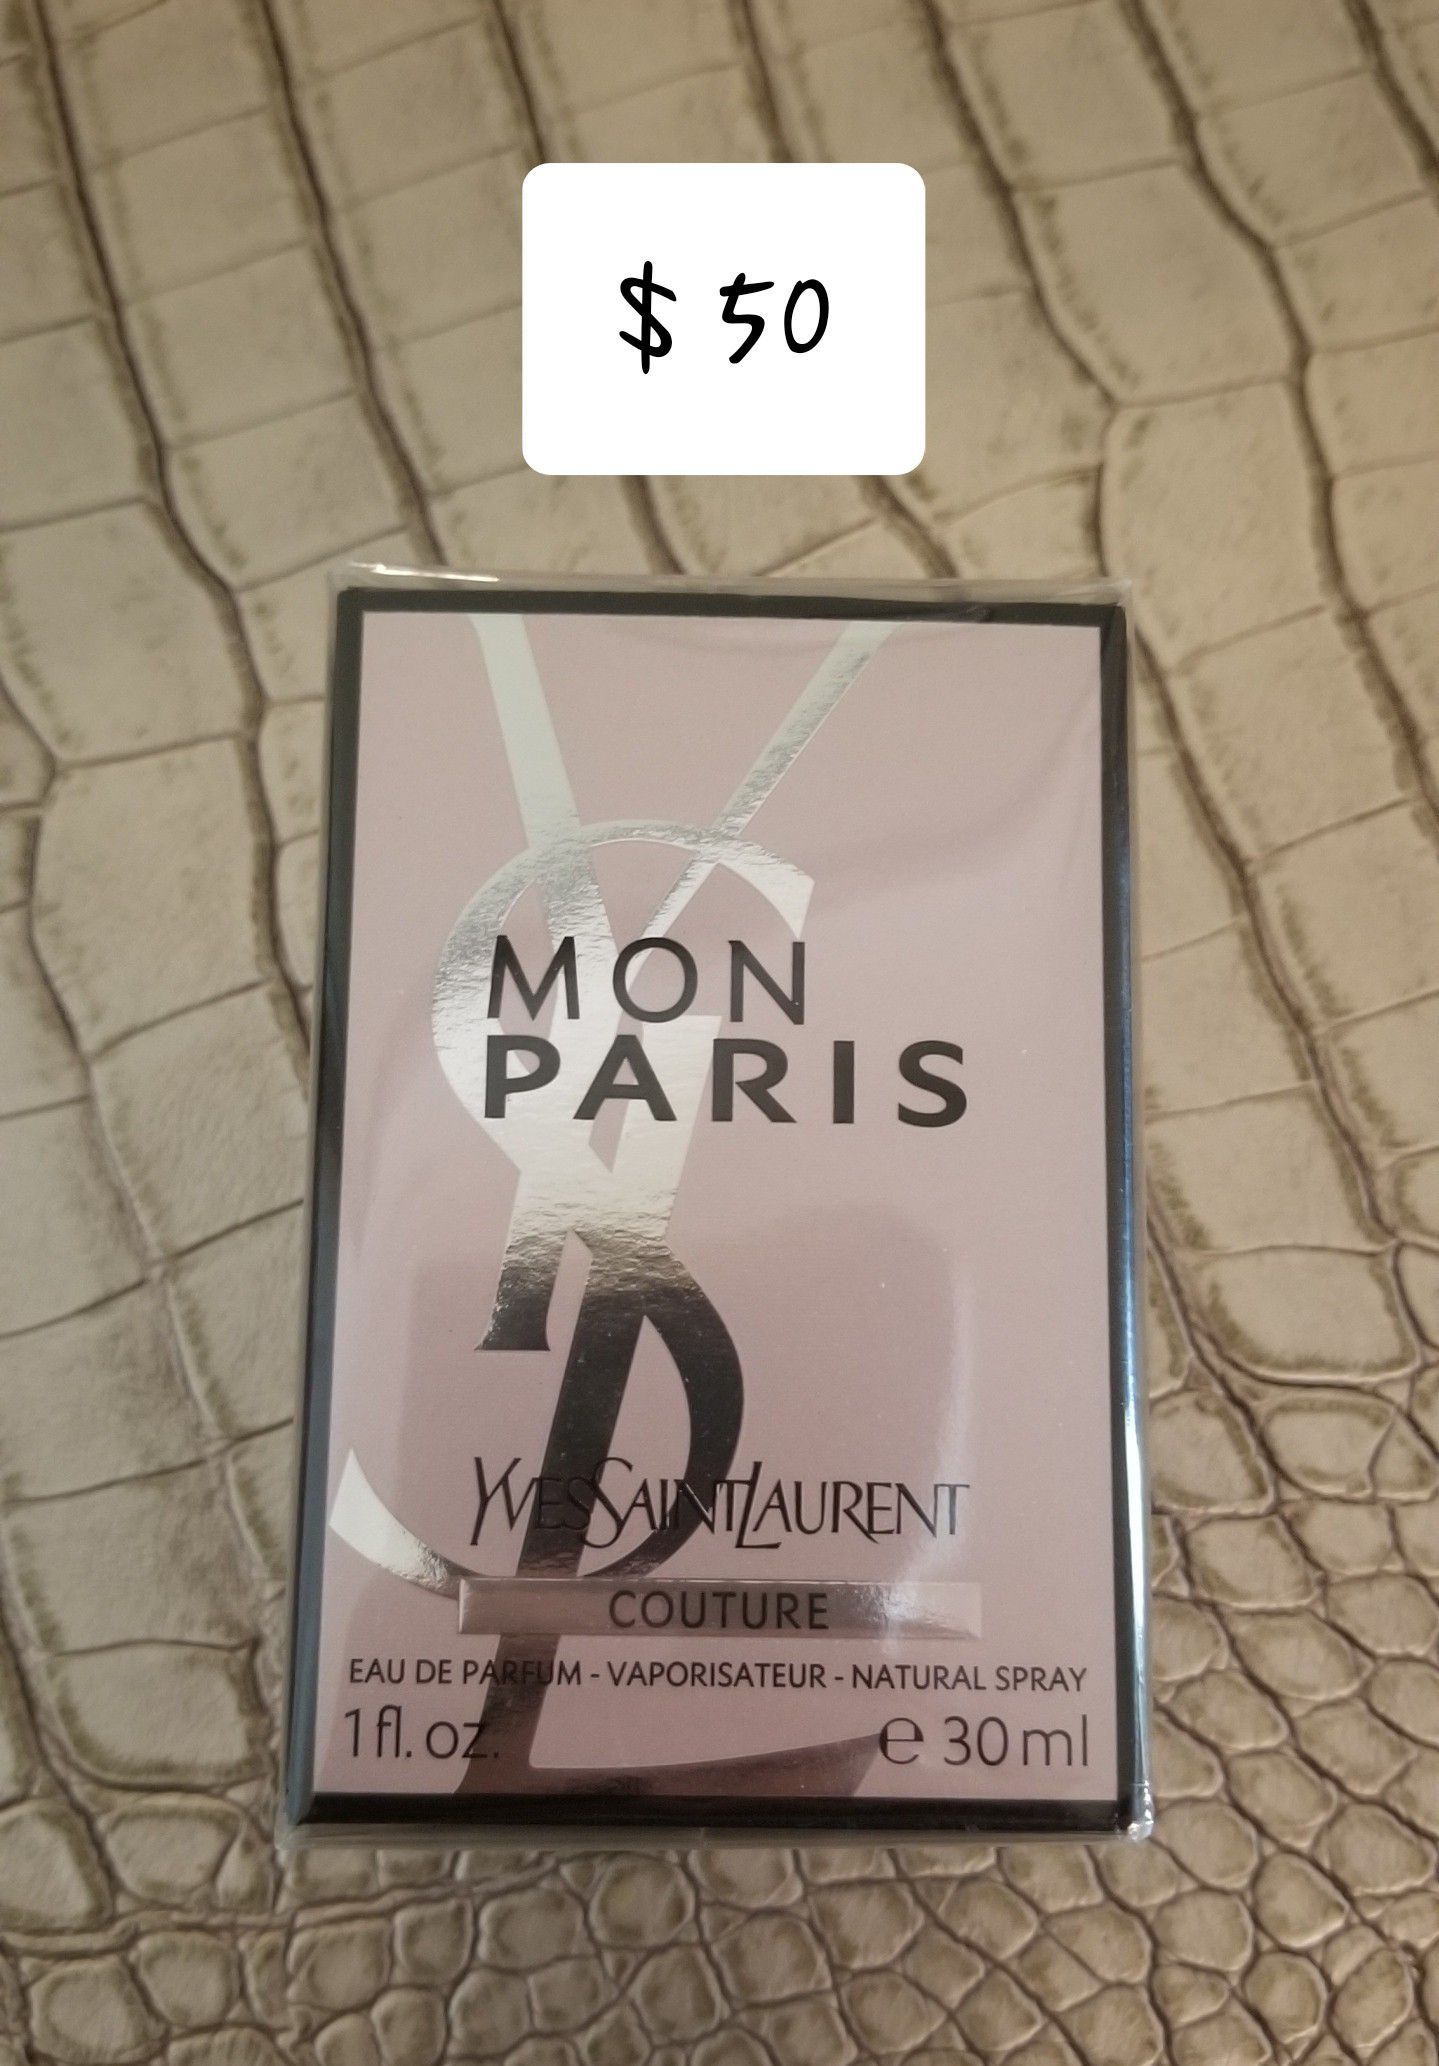 Lady's Fragrance - Mon Paris Couture by YSL